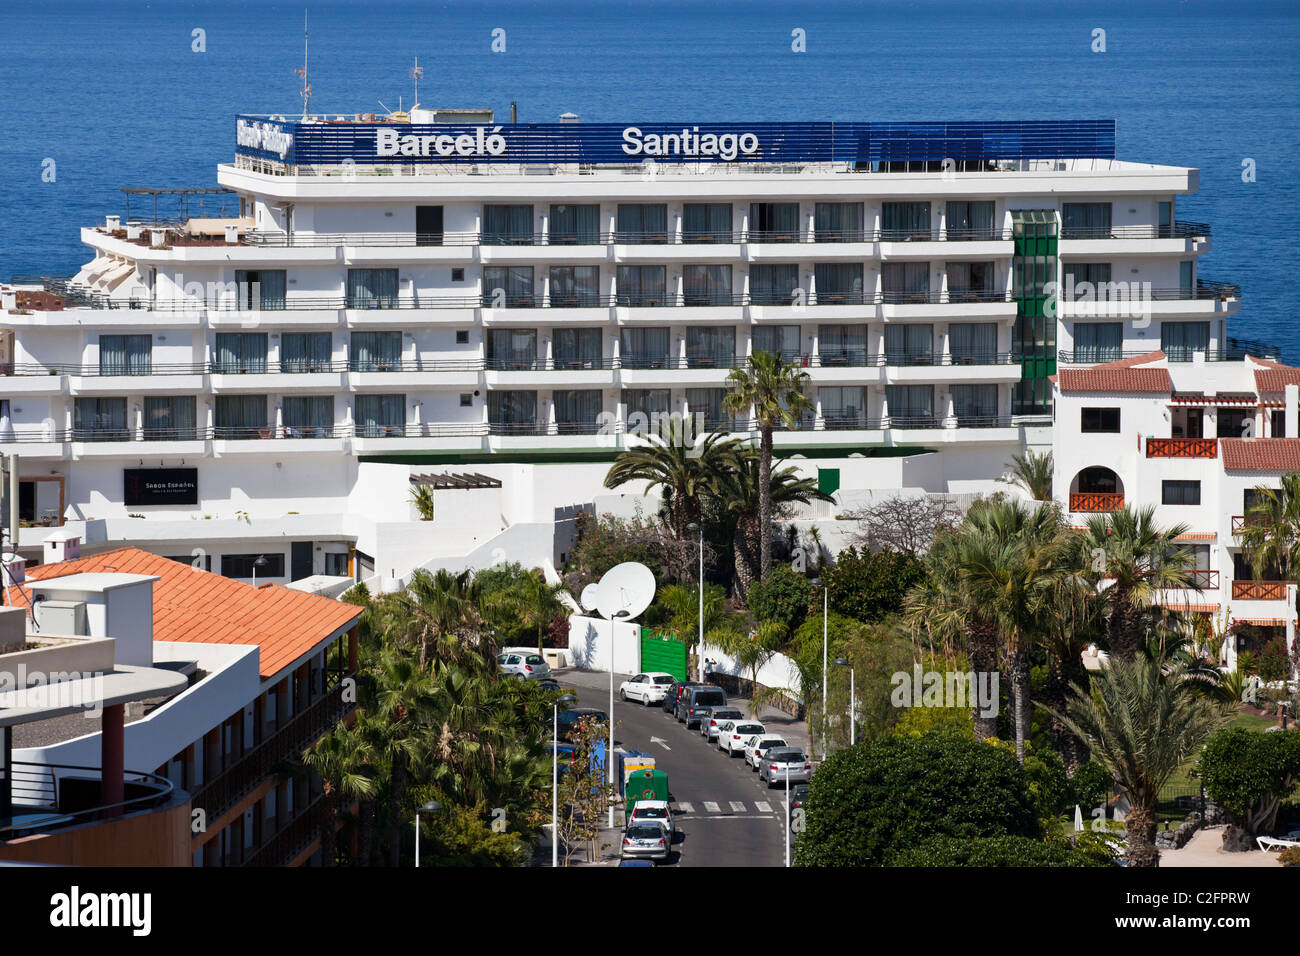 The Barcelo hotel, Puerto Santiago, Tenerife Stock Photo - Alamy